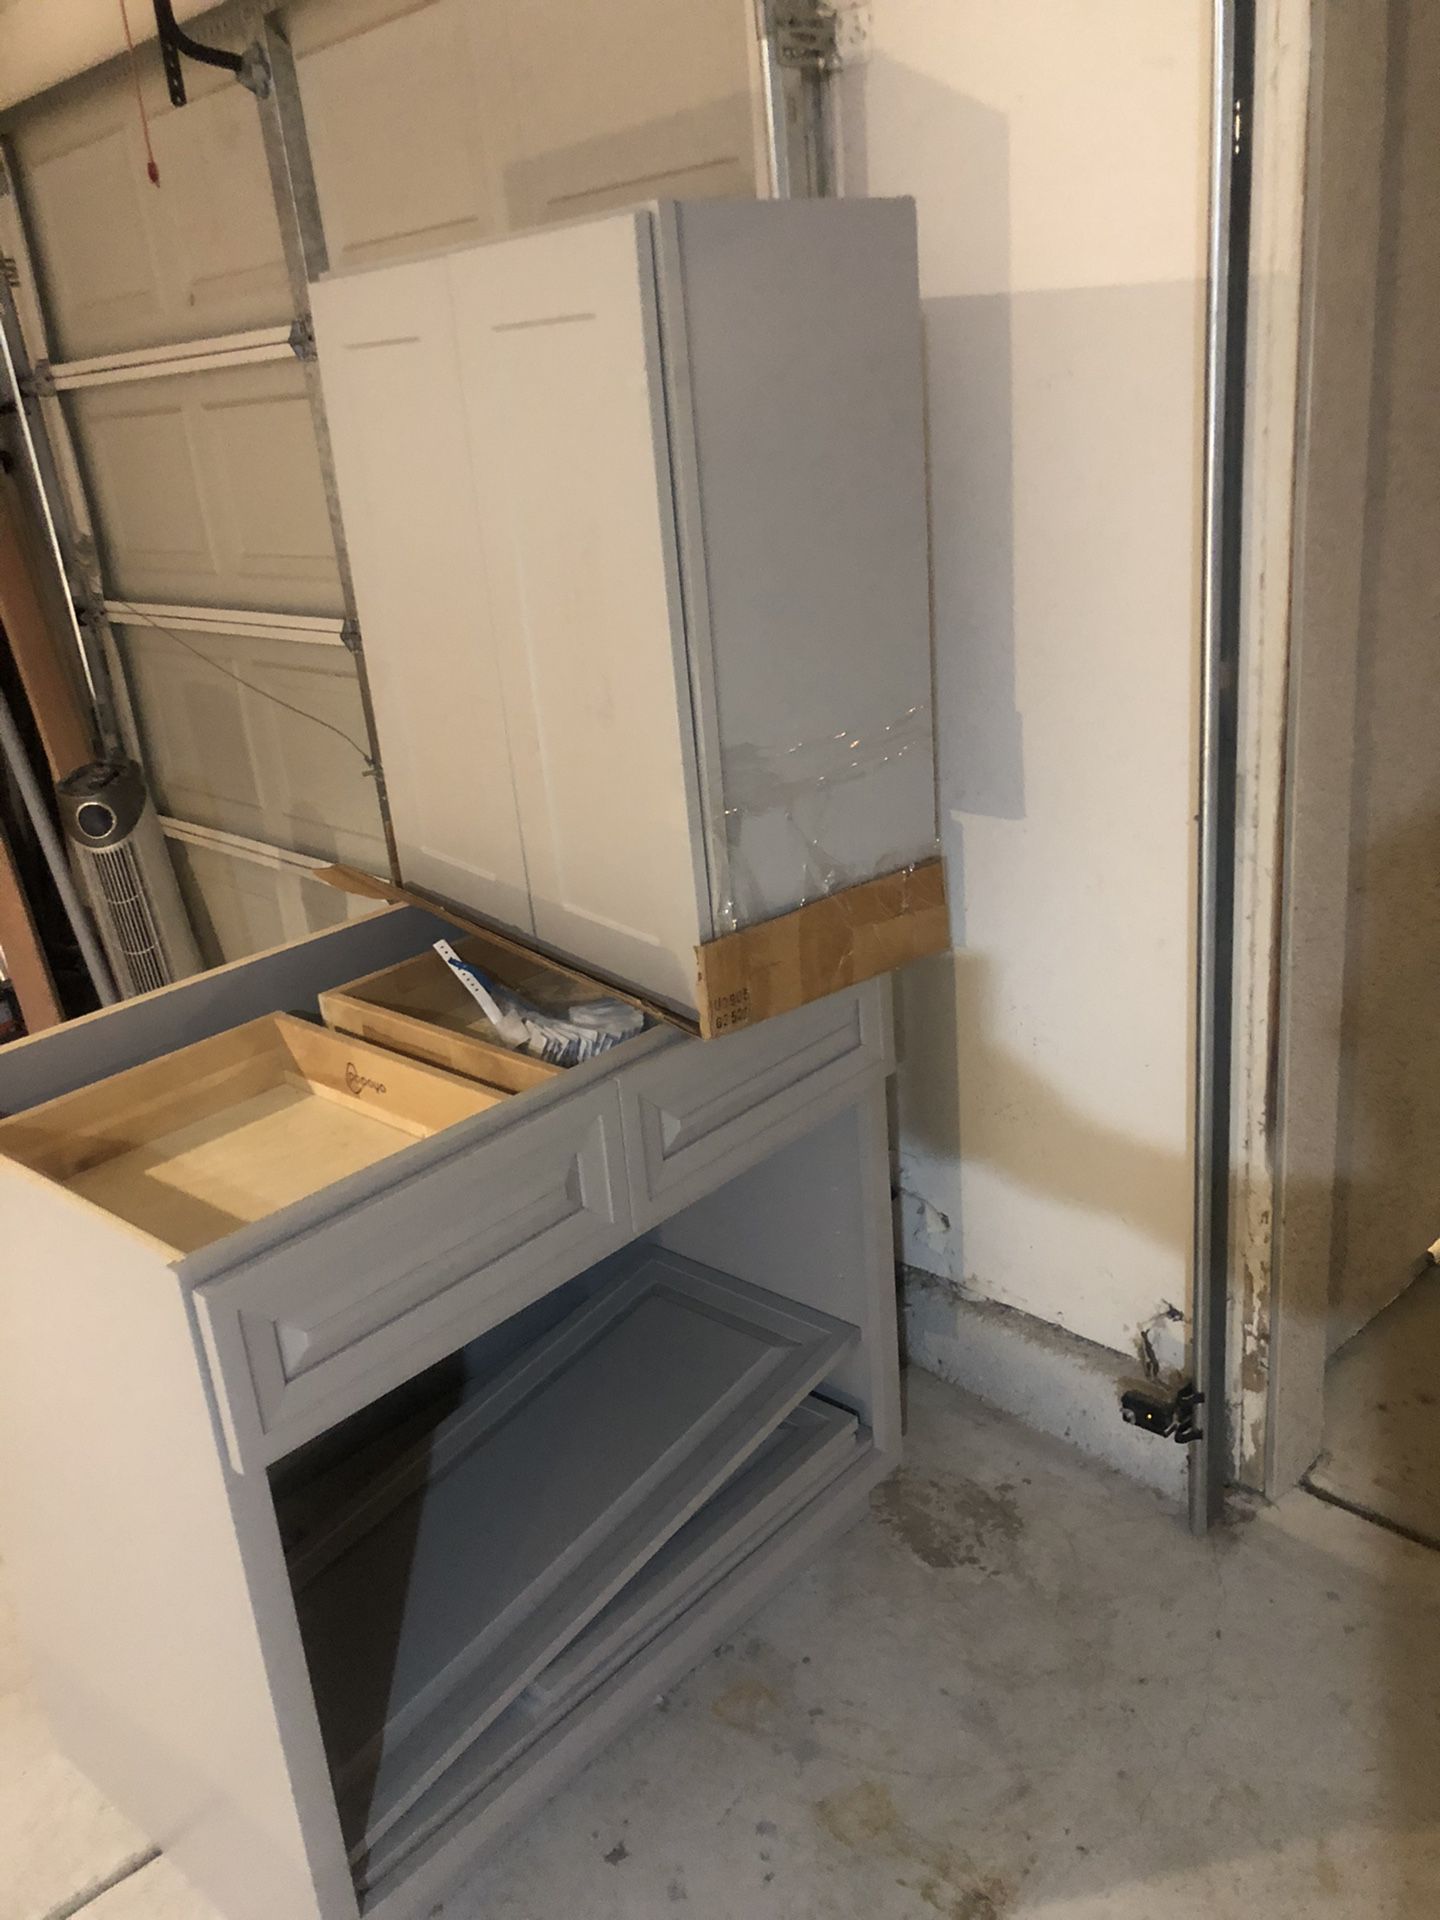 Kitchen/bathroom cabinets brand new